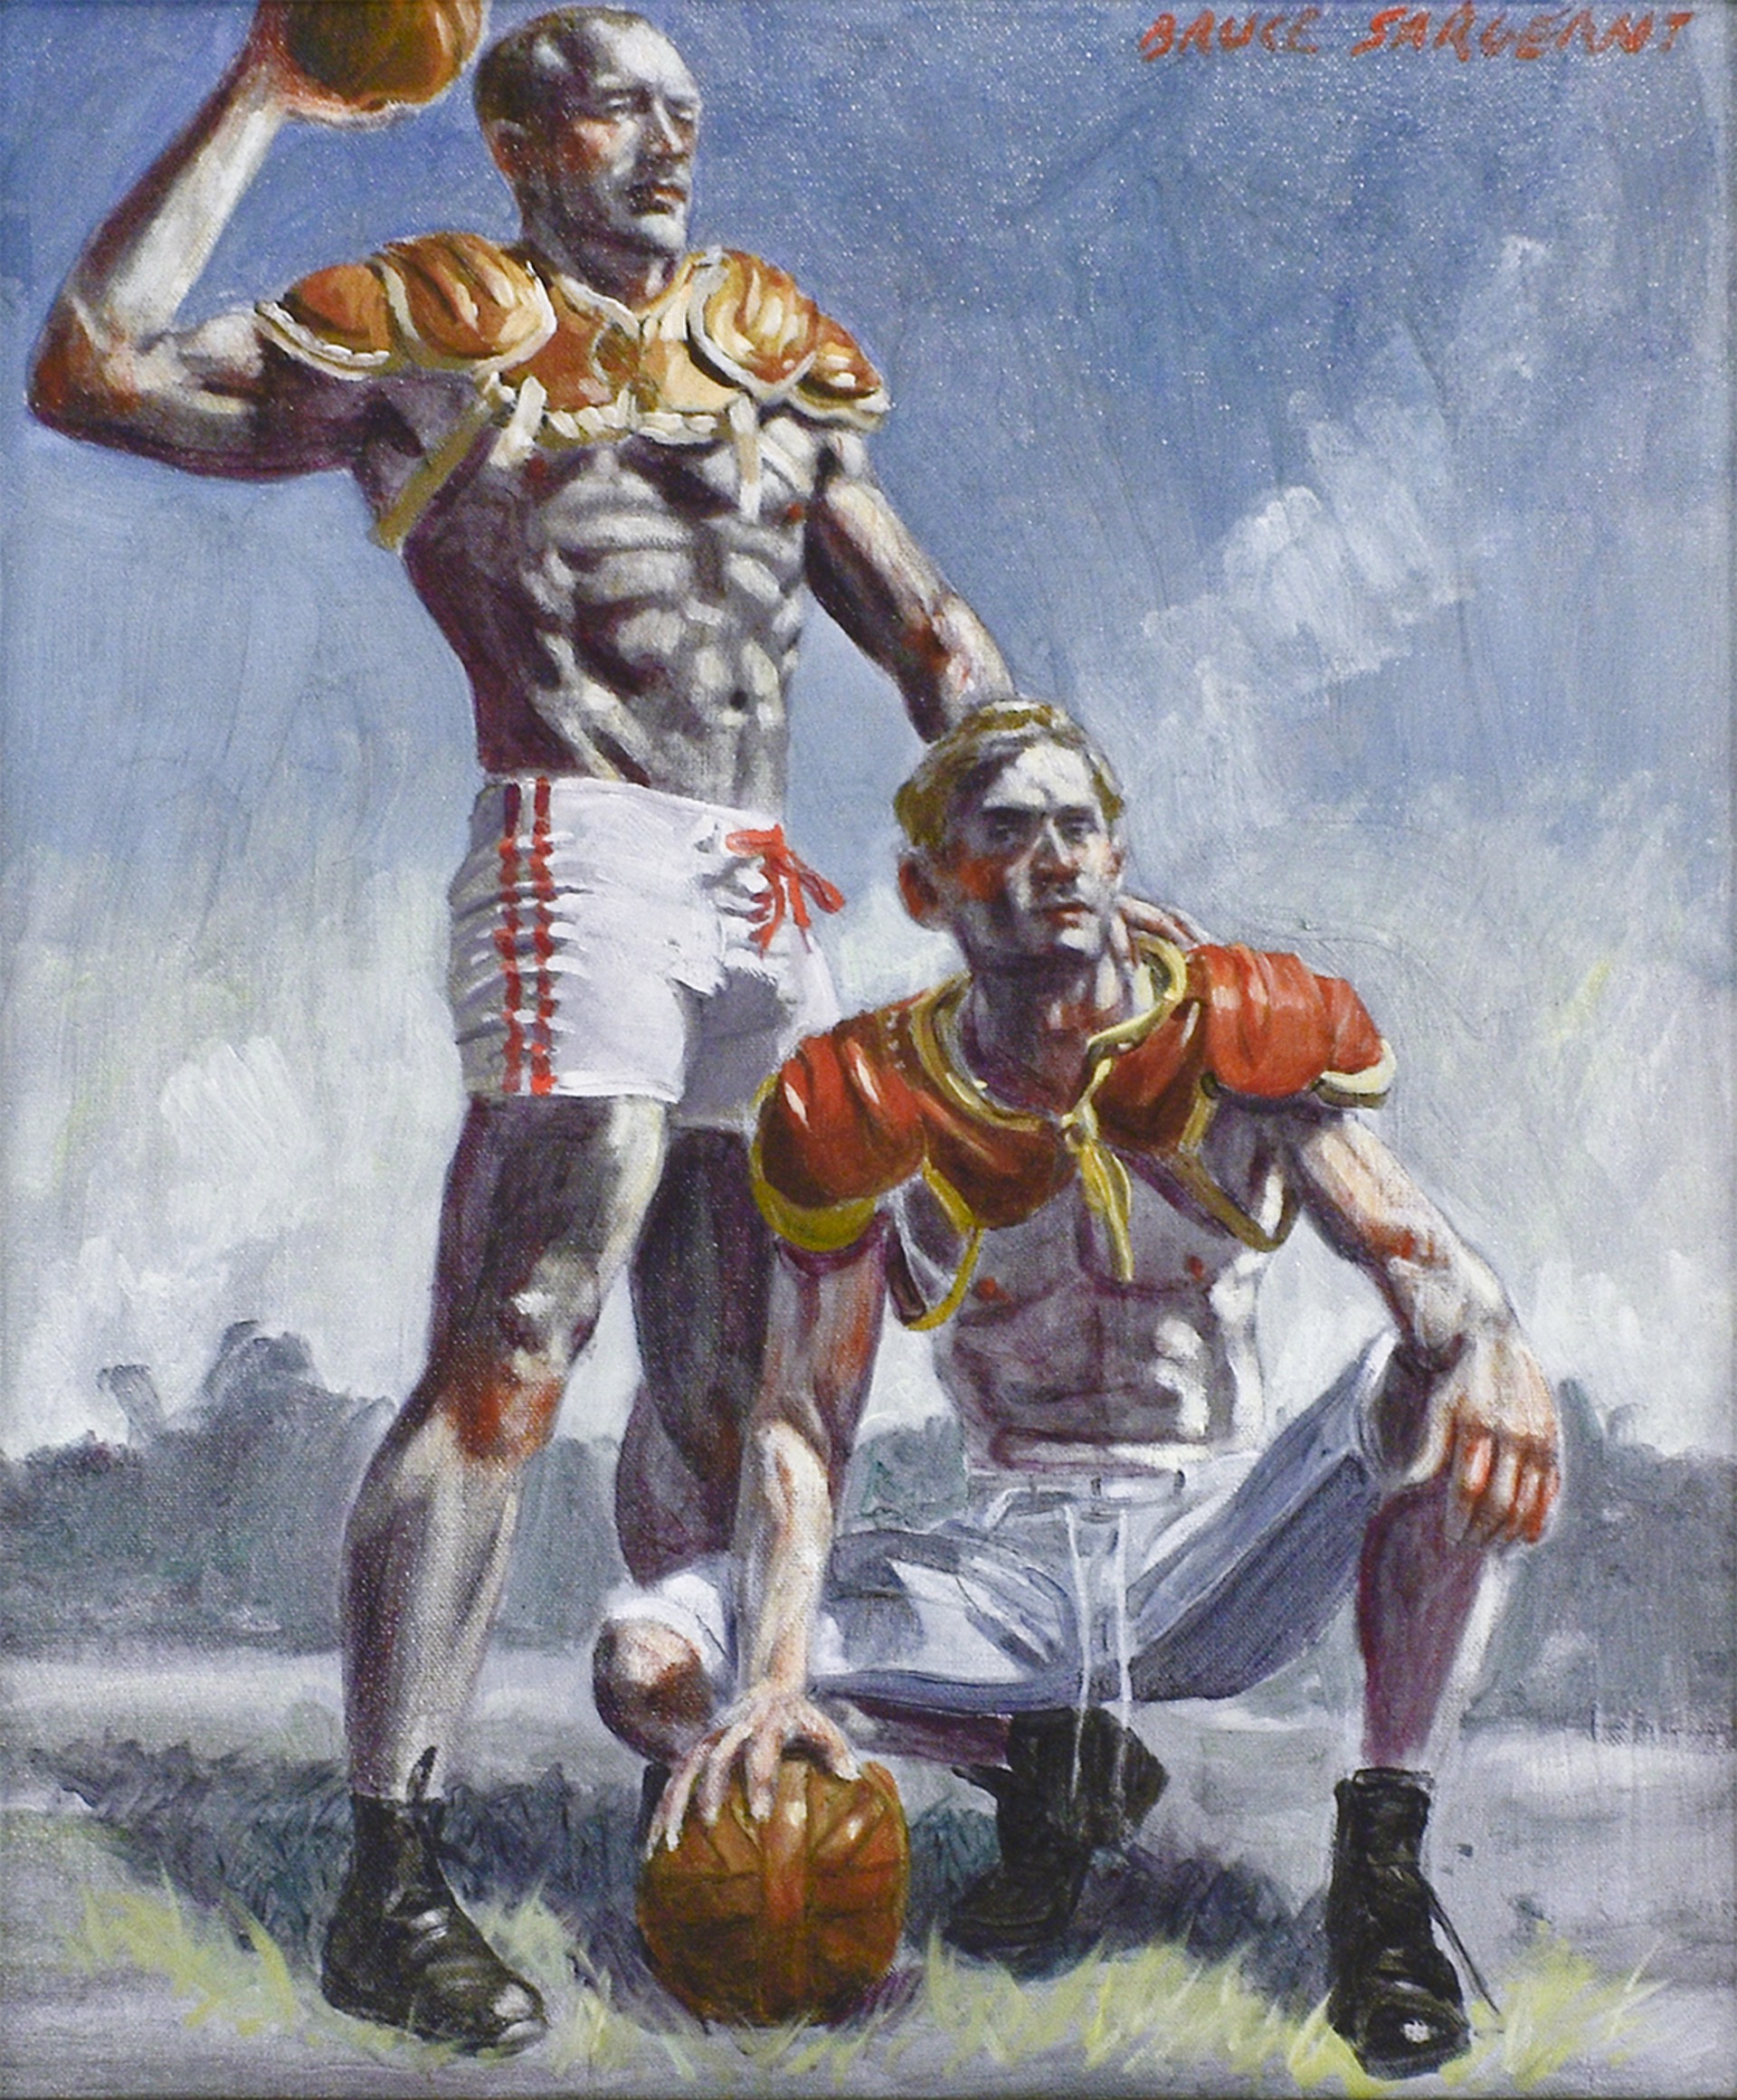 Two Football Players by Mark Beard